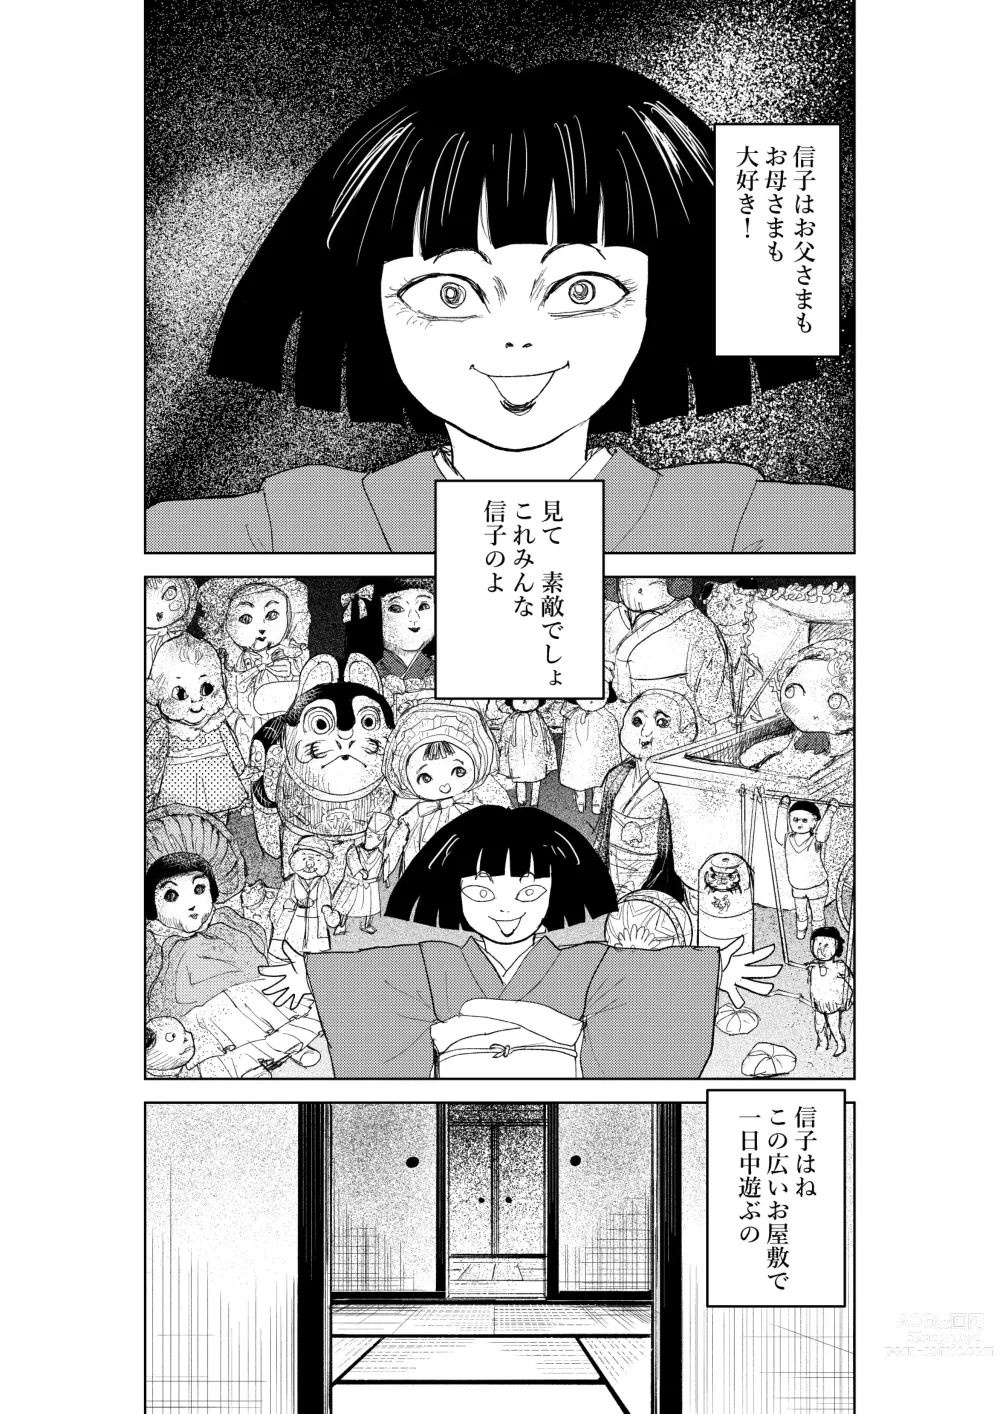 Page 3 of doujinshi Zashikiwarashi